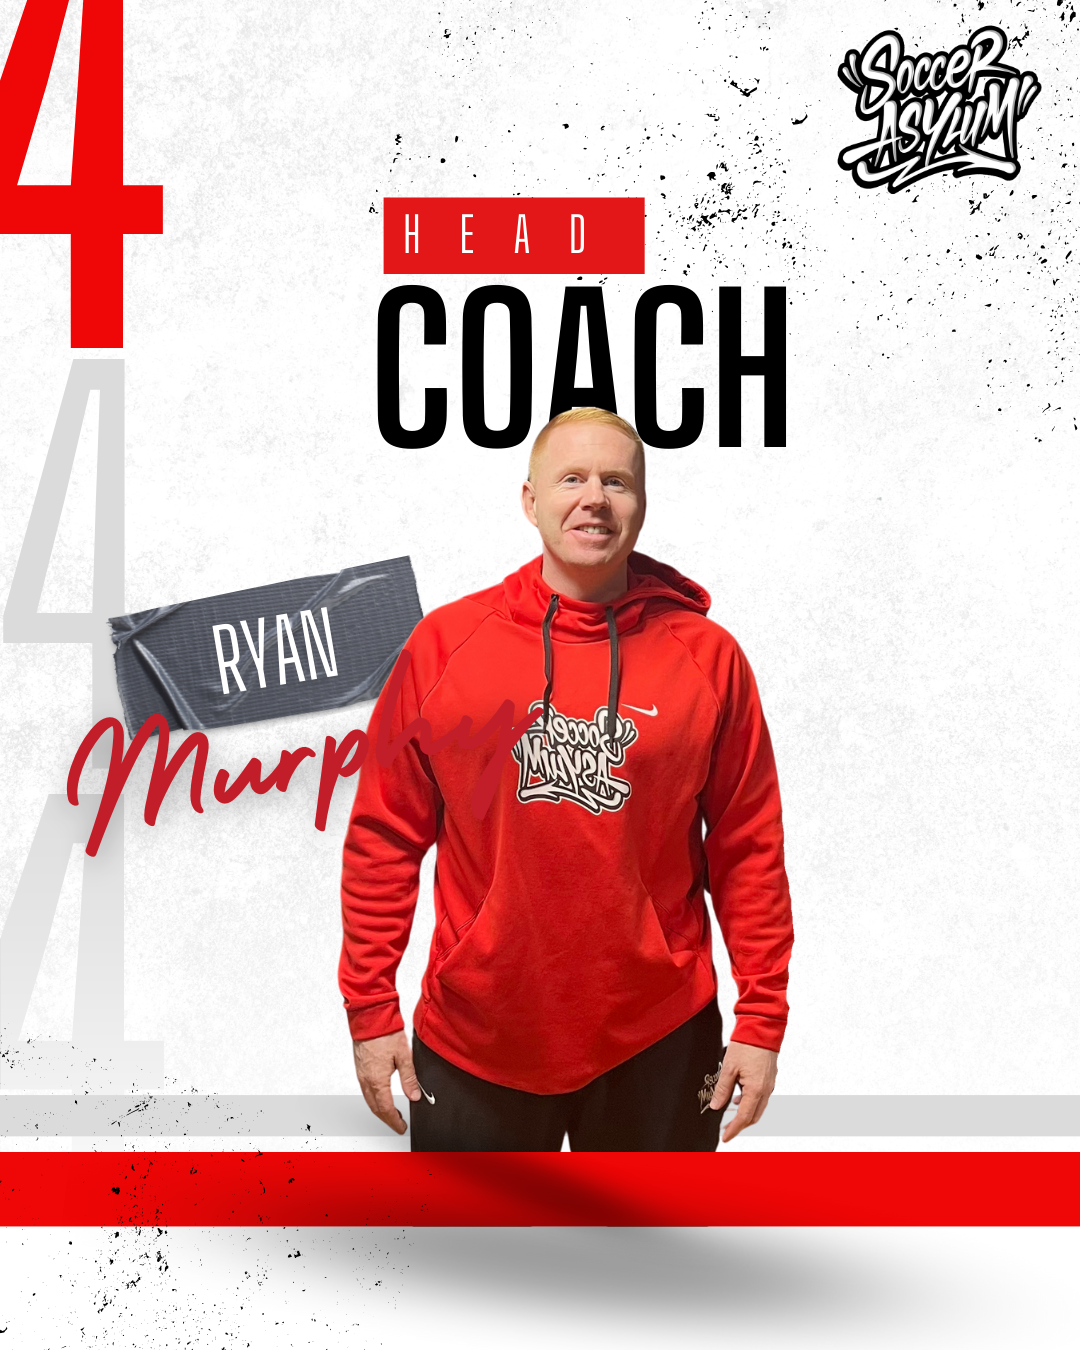 Ryan Murphy Soccer Coach